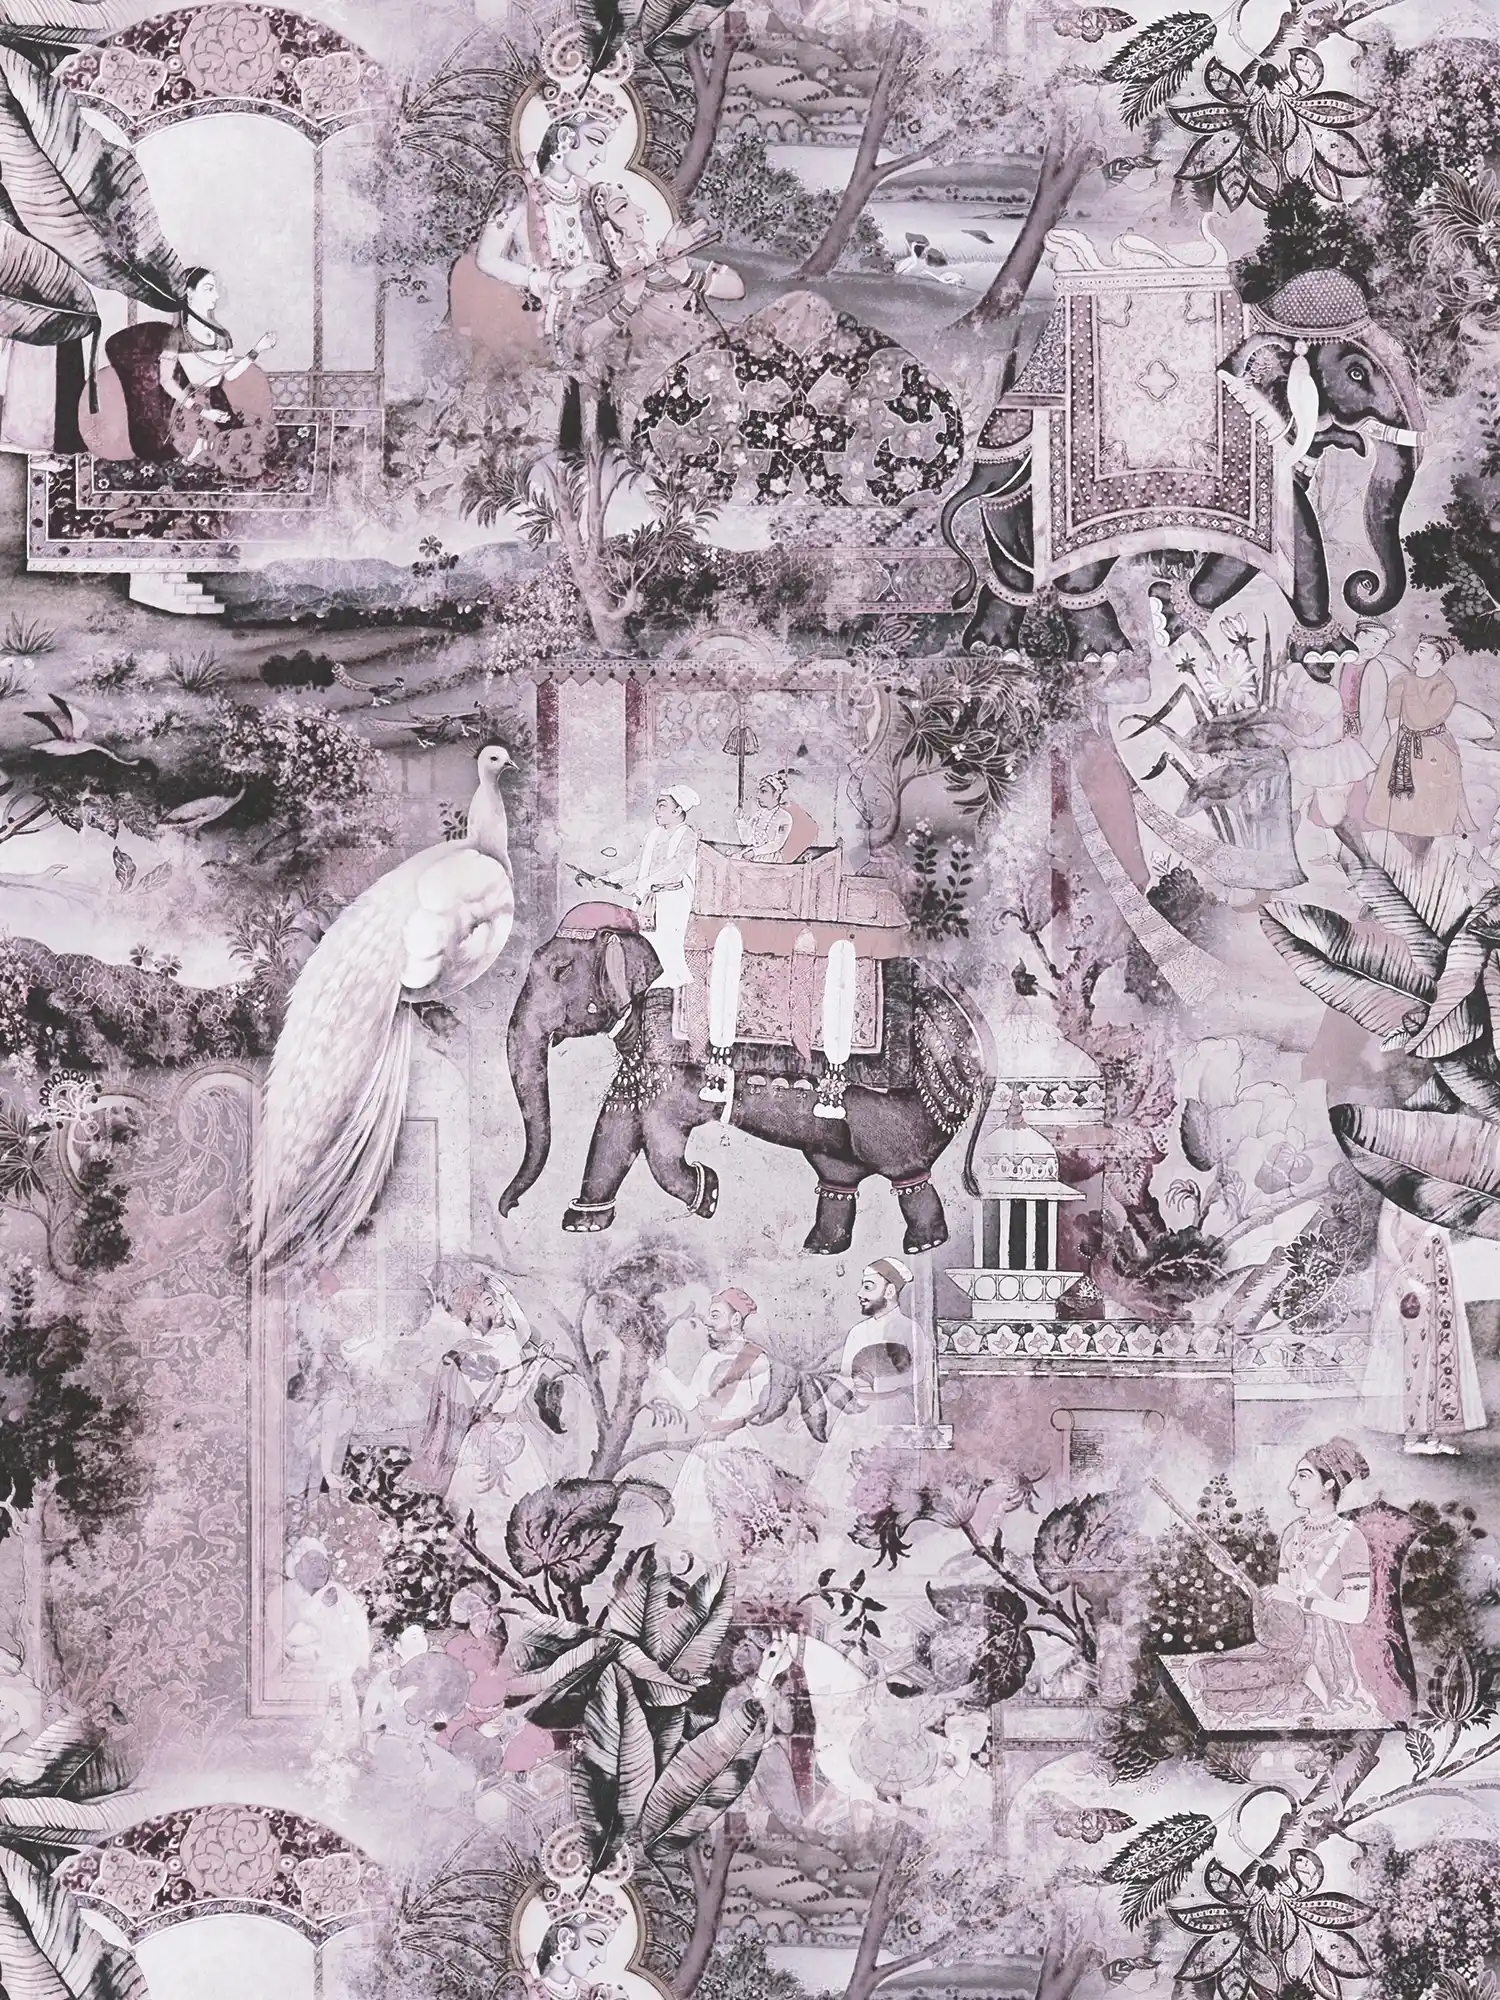             Vliesbehang India met olifant & vintage patroon - roze, grijs
        